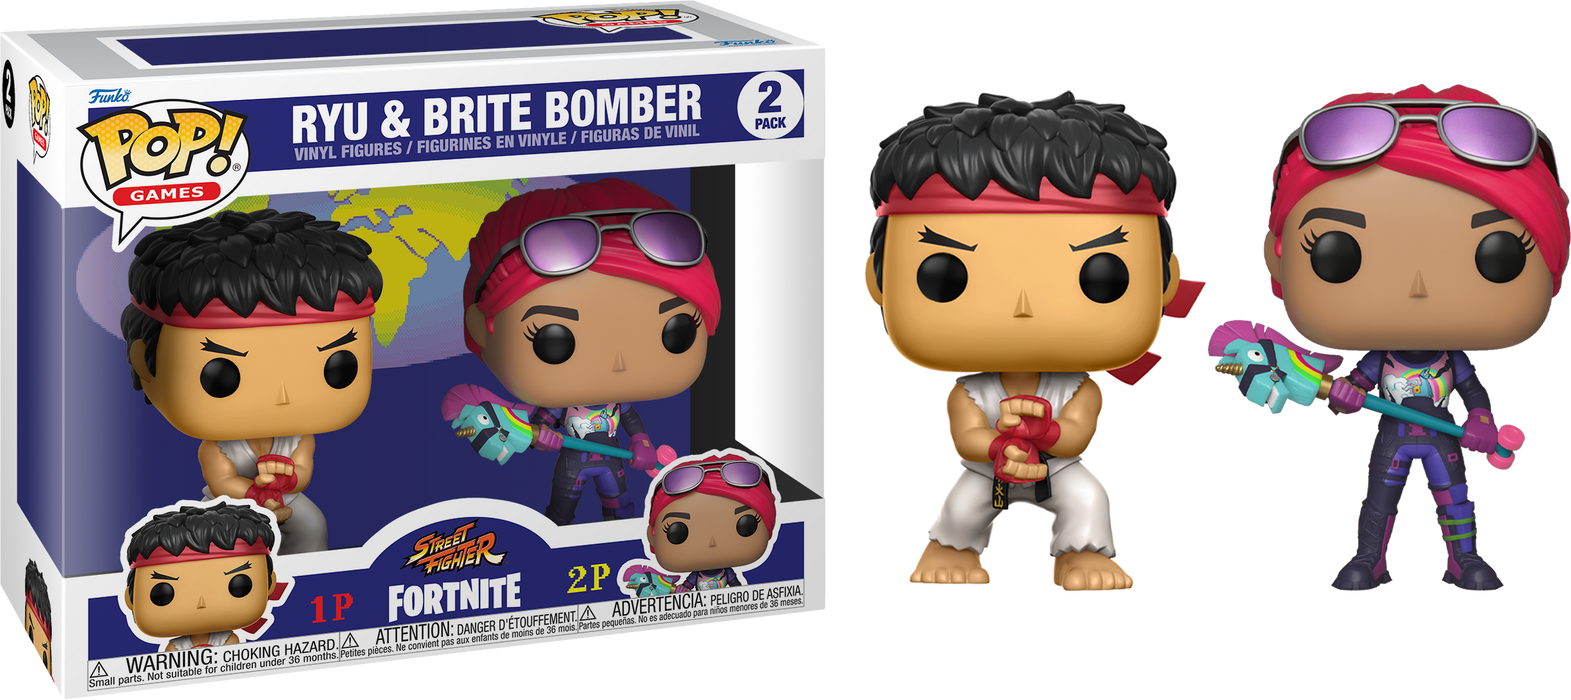 Ryu & Brite Bomber (2-Pack) Funko Pop! Games Street Fighter